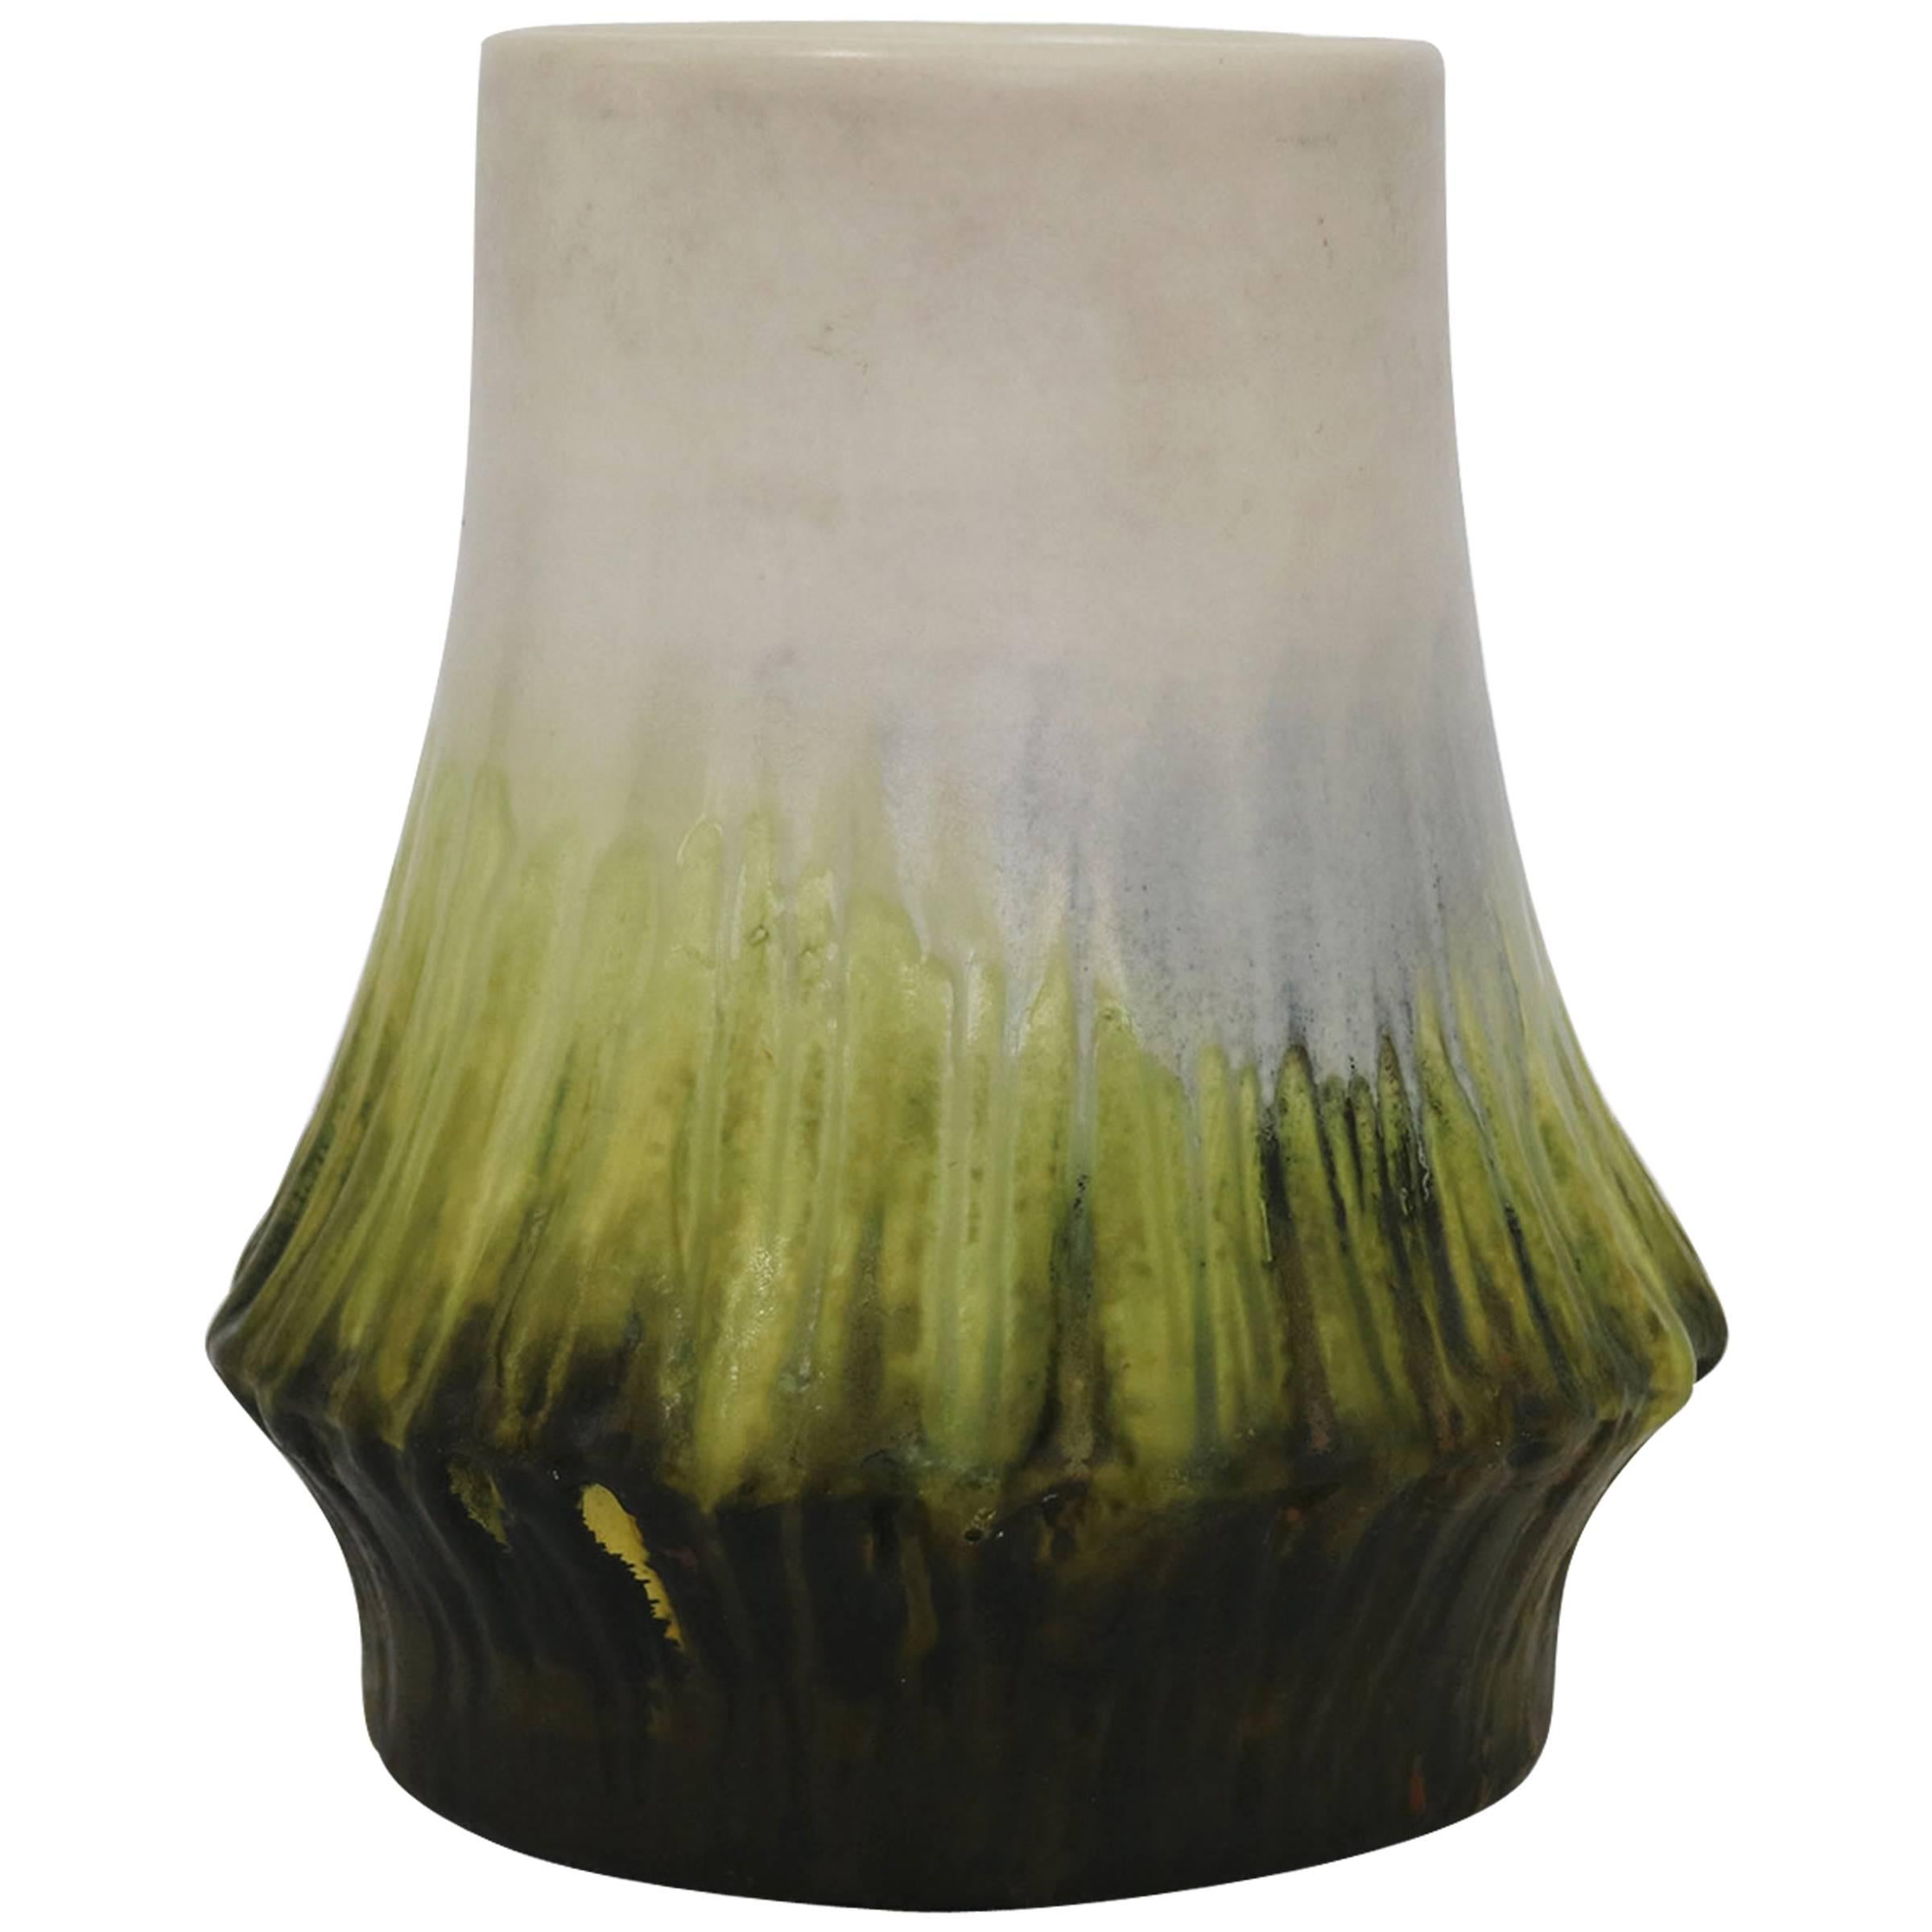 Marcello Fantoni Vase For Sale